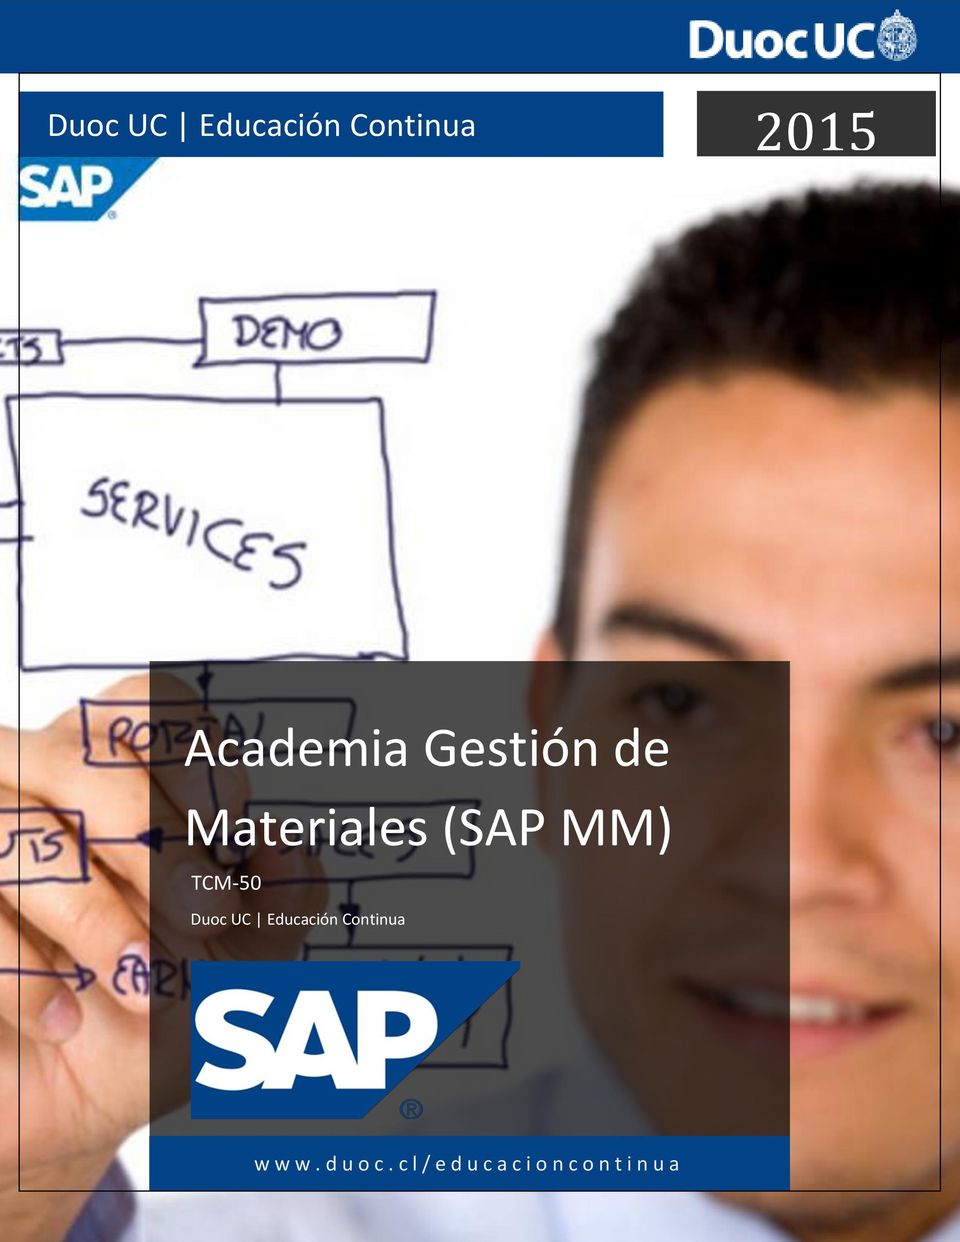 (SAP MM) TCM-50 Duoc UC Educación Continua w w